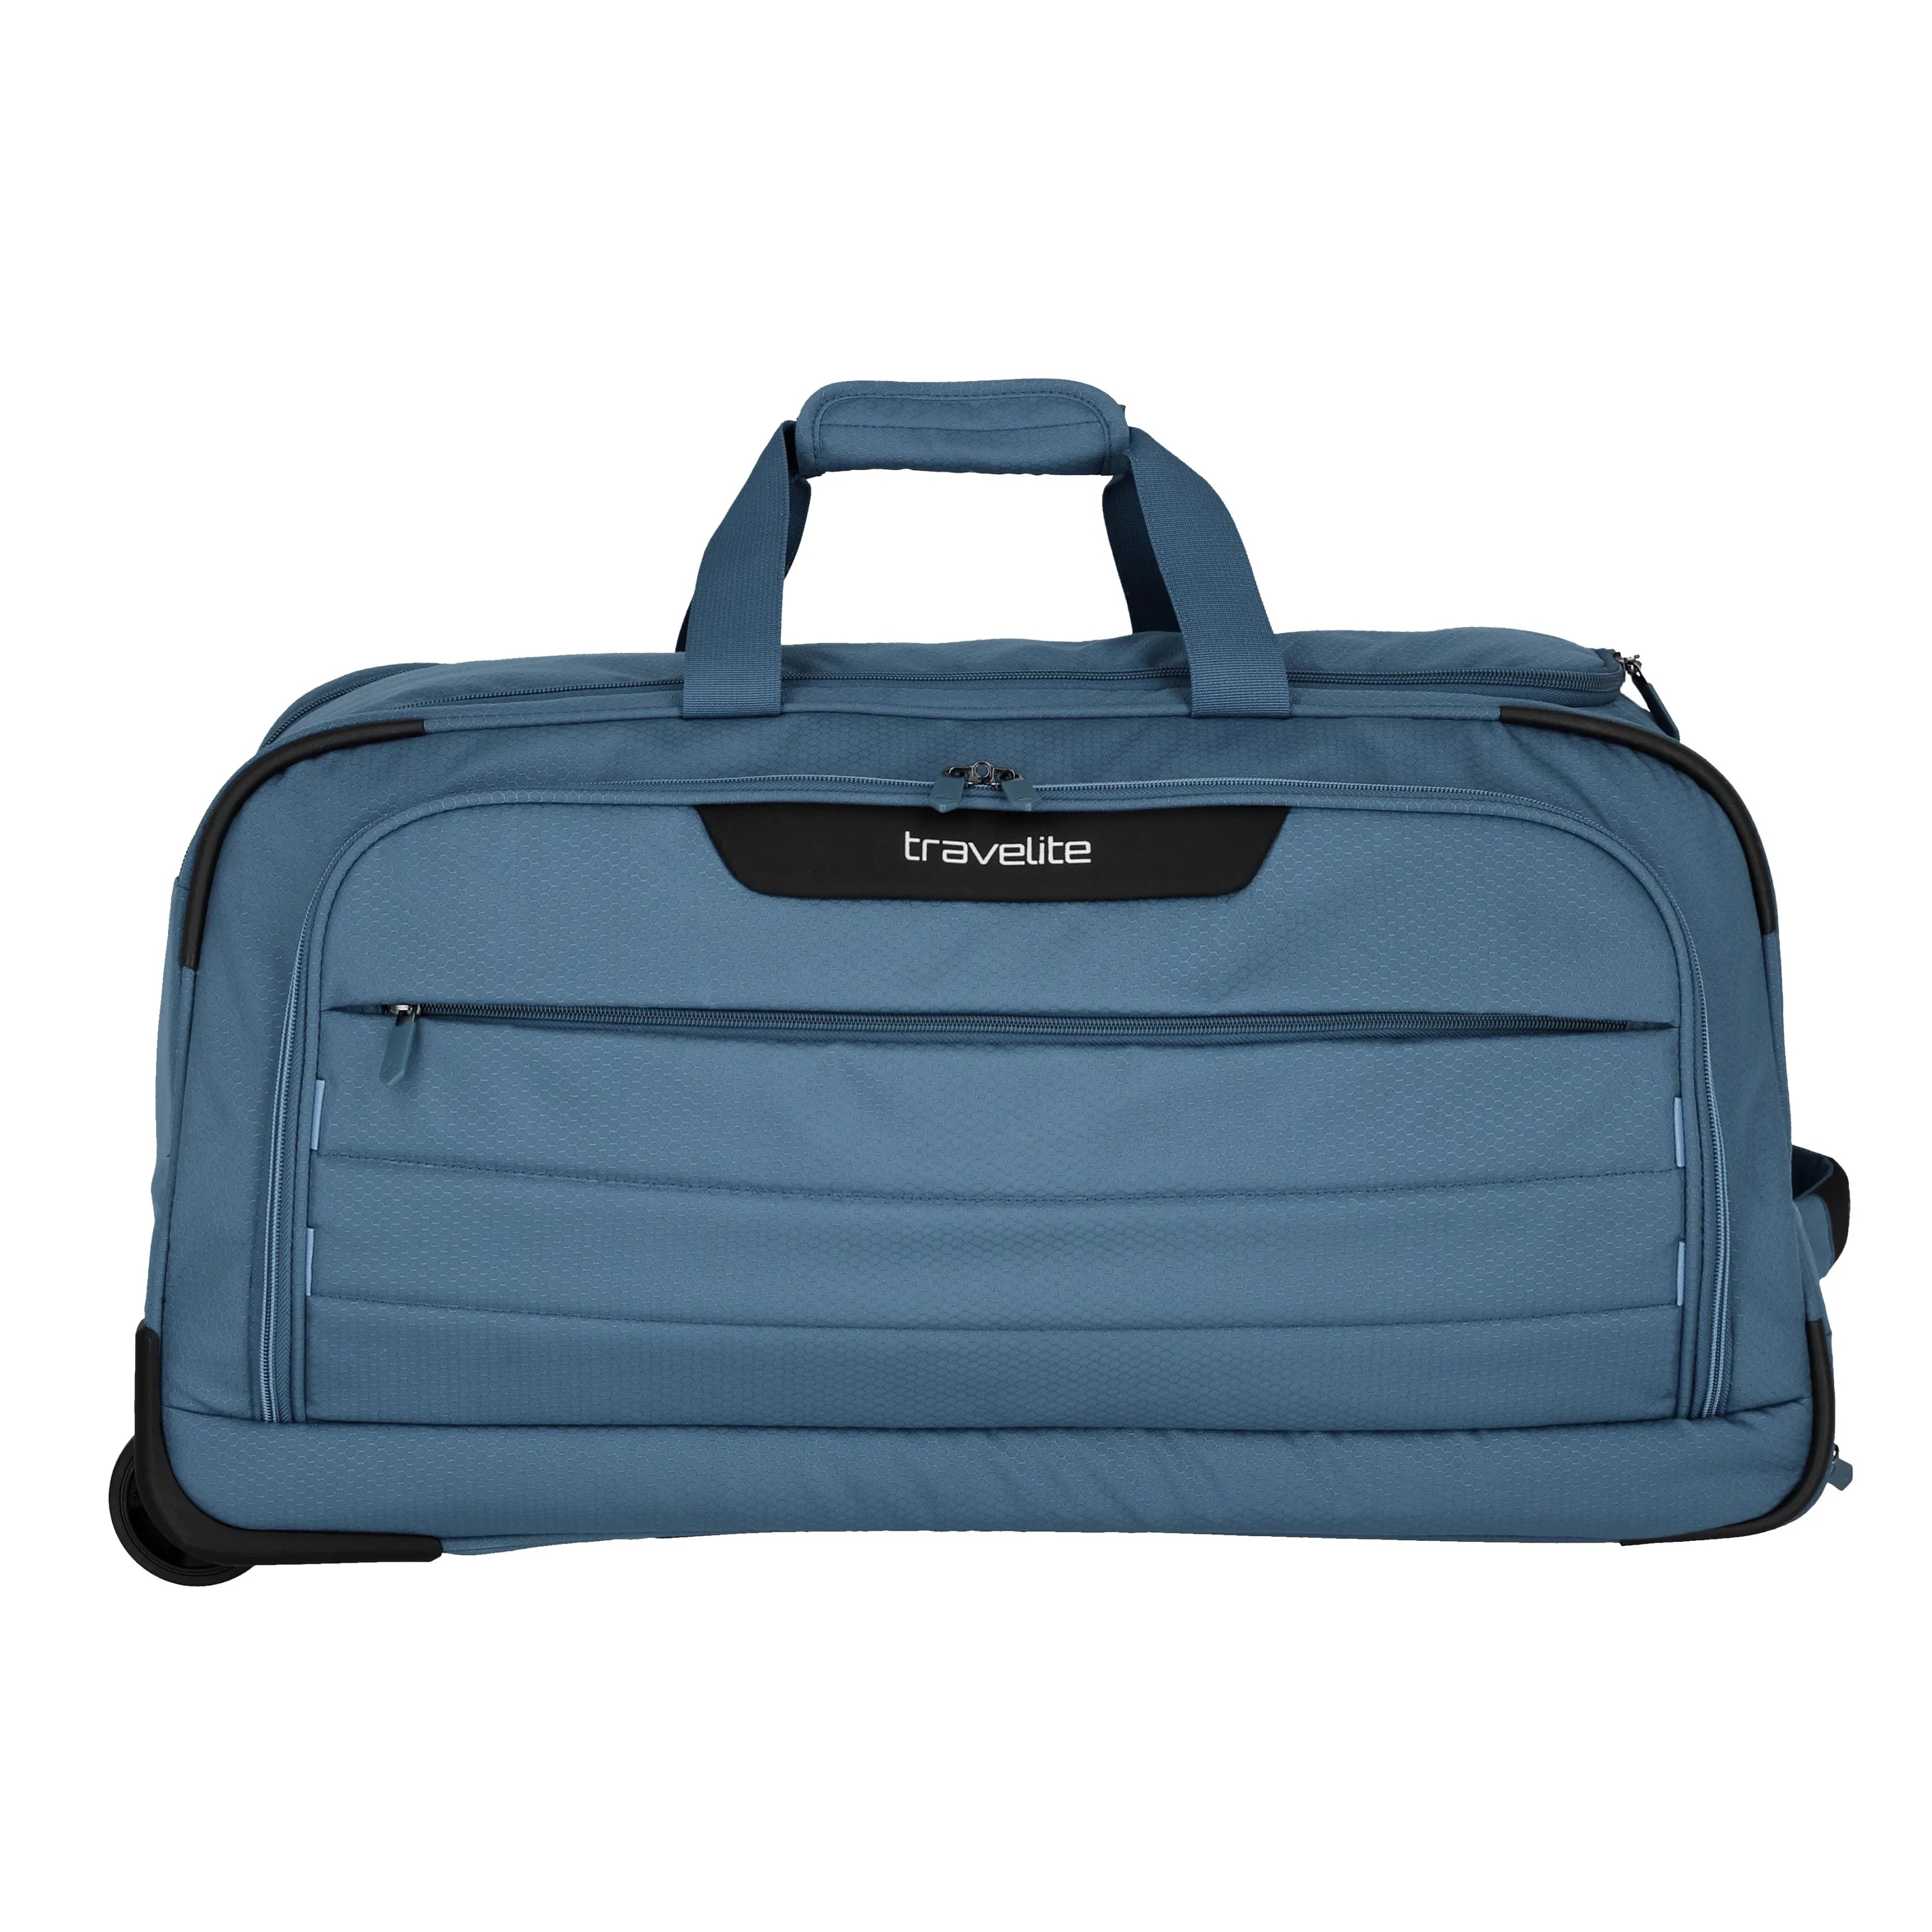 Travelite Skaii roller travel bag 65 cm - panorama blue